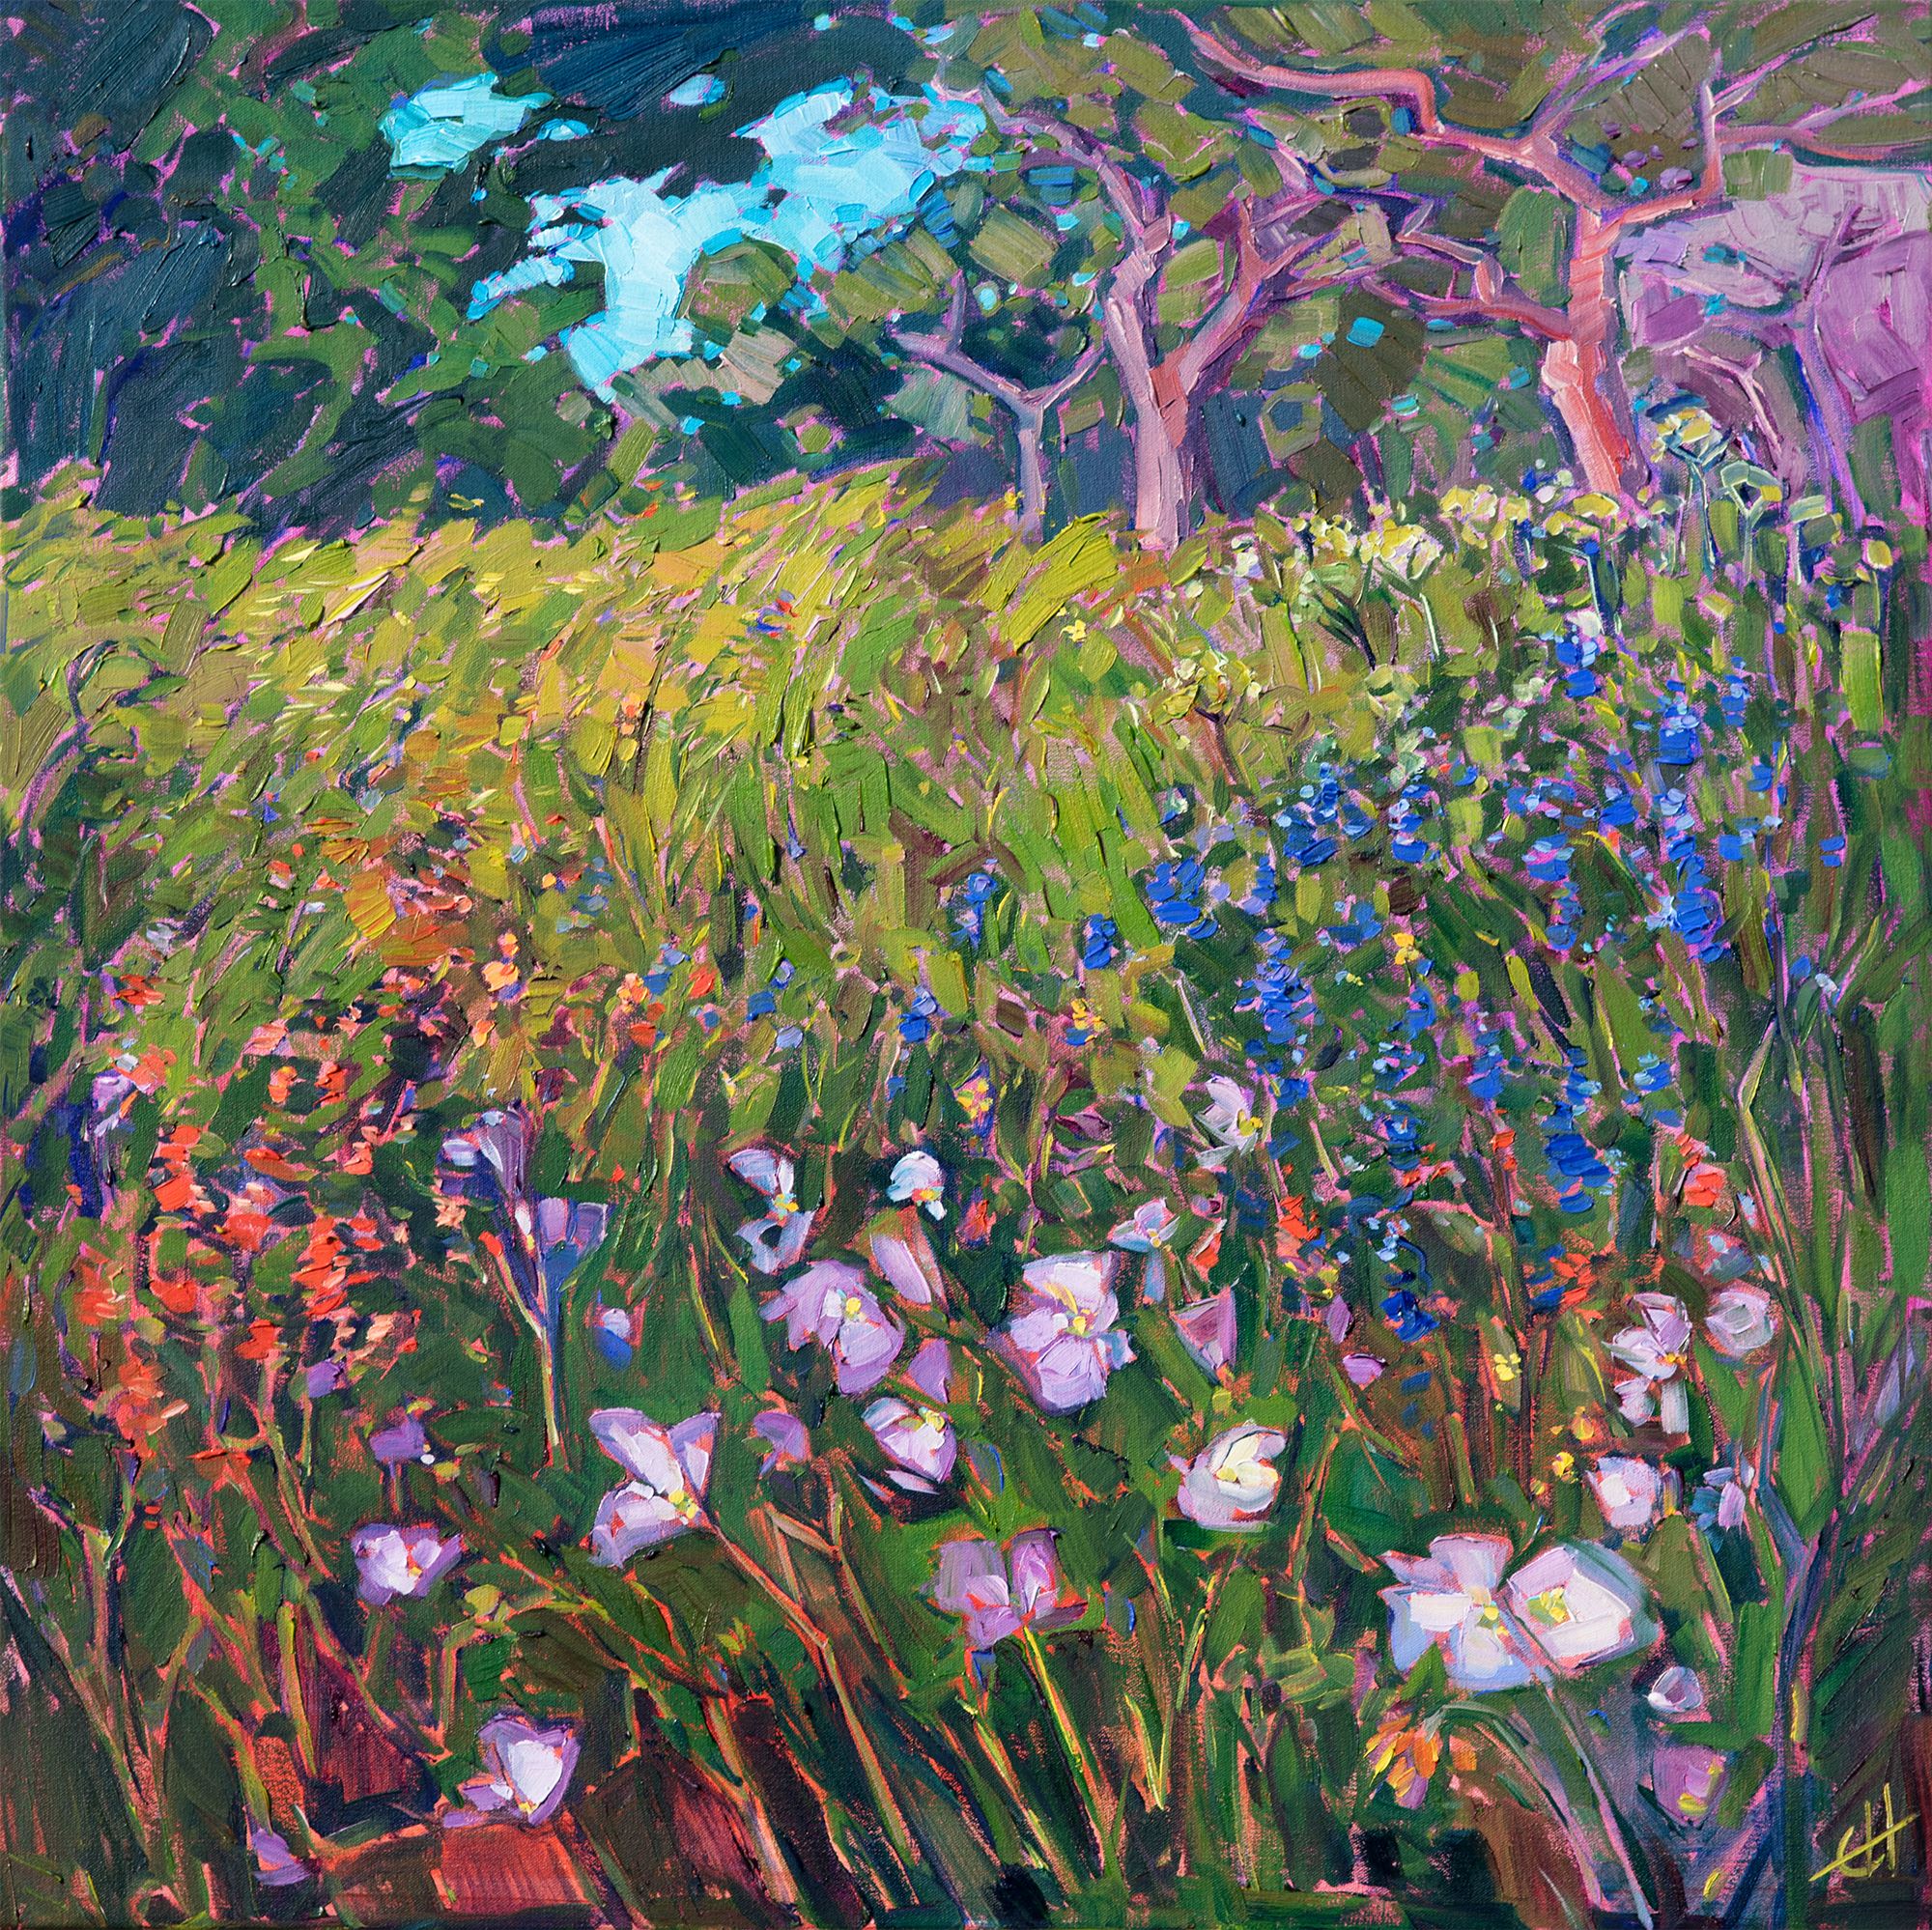 An Erin Hanson super bloom painting 2